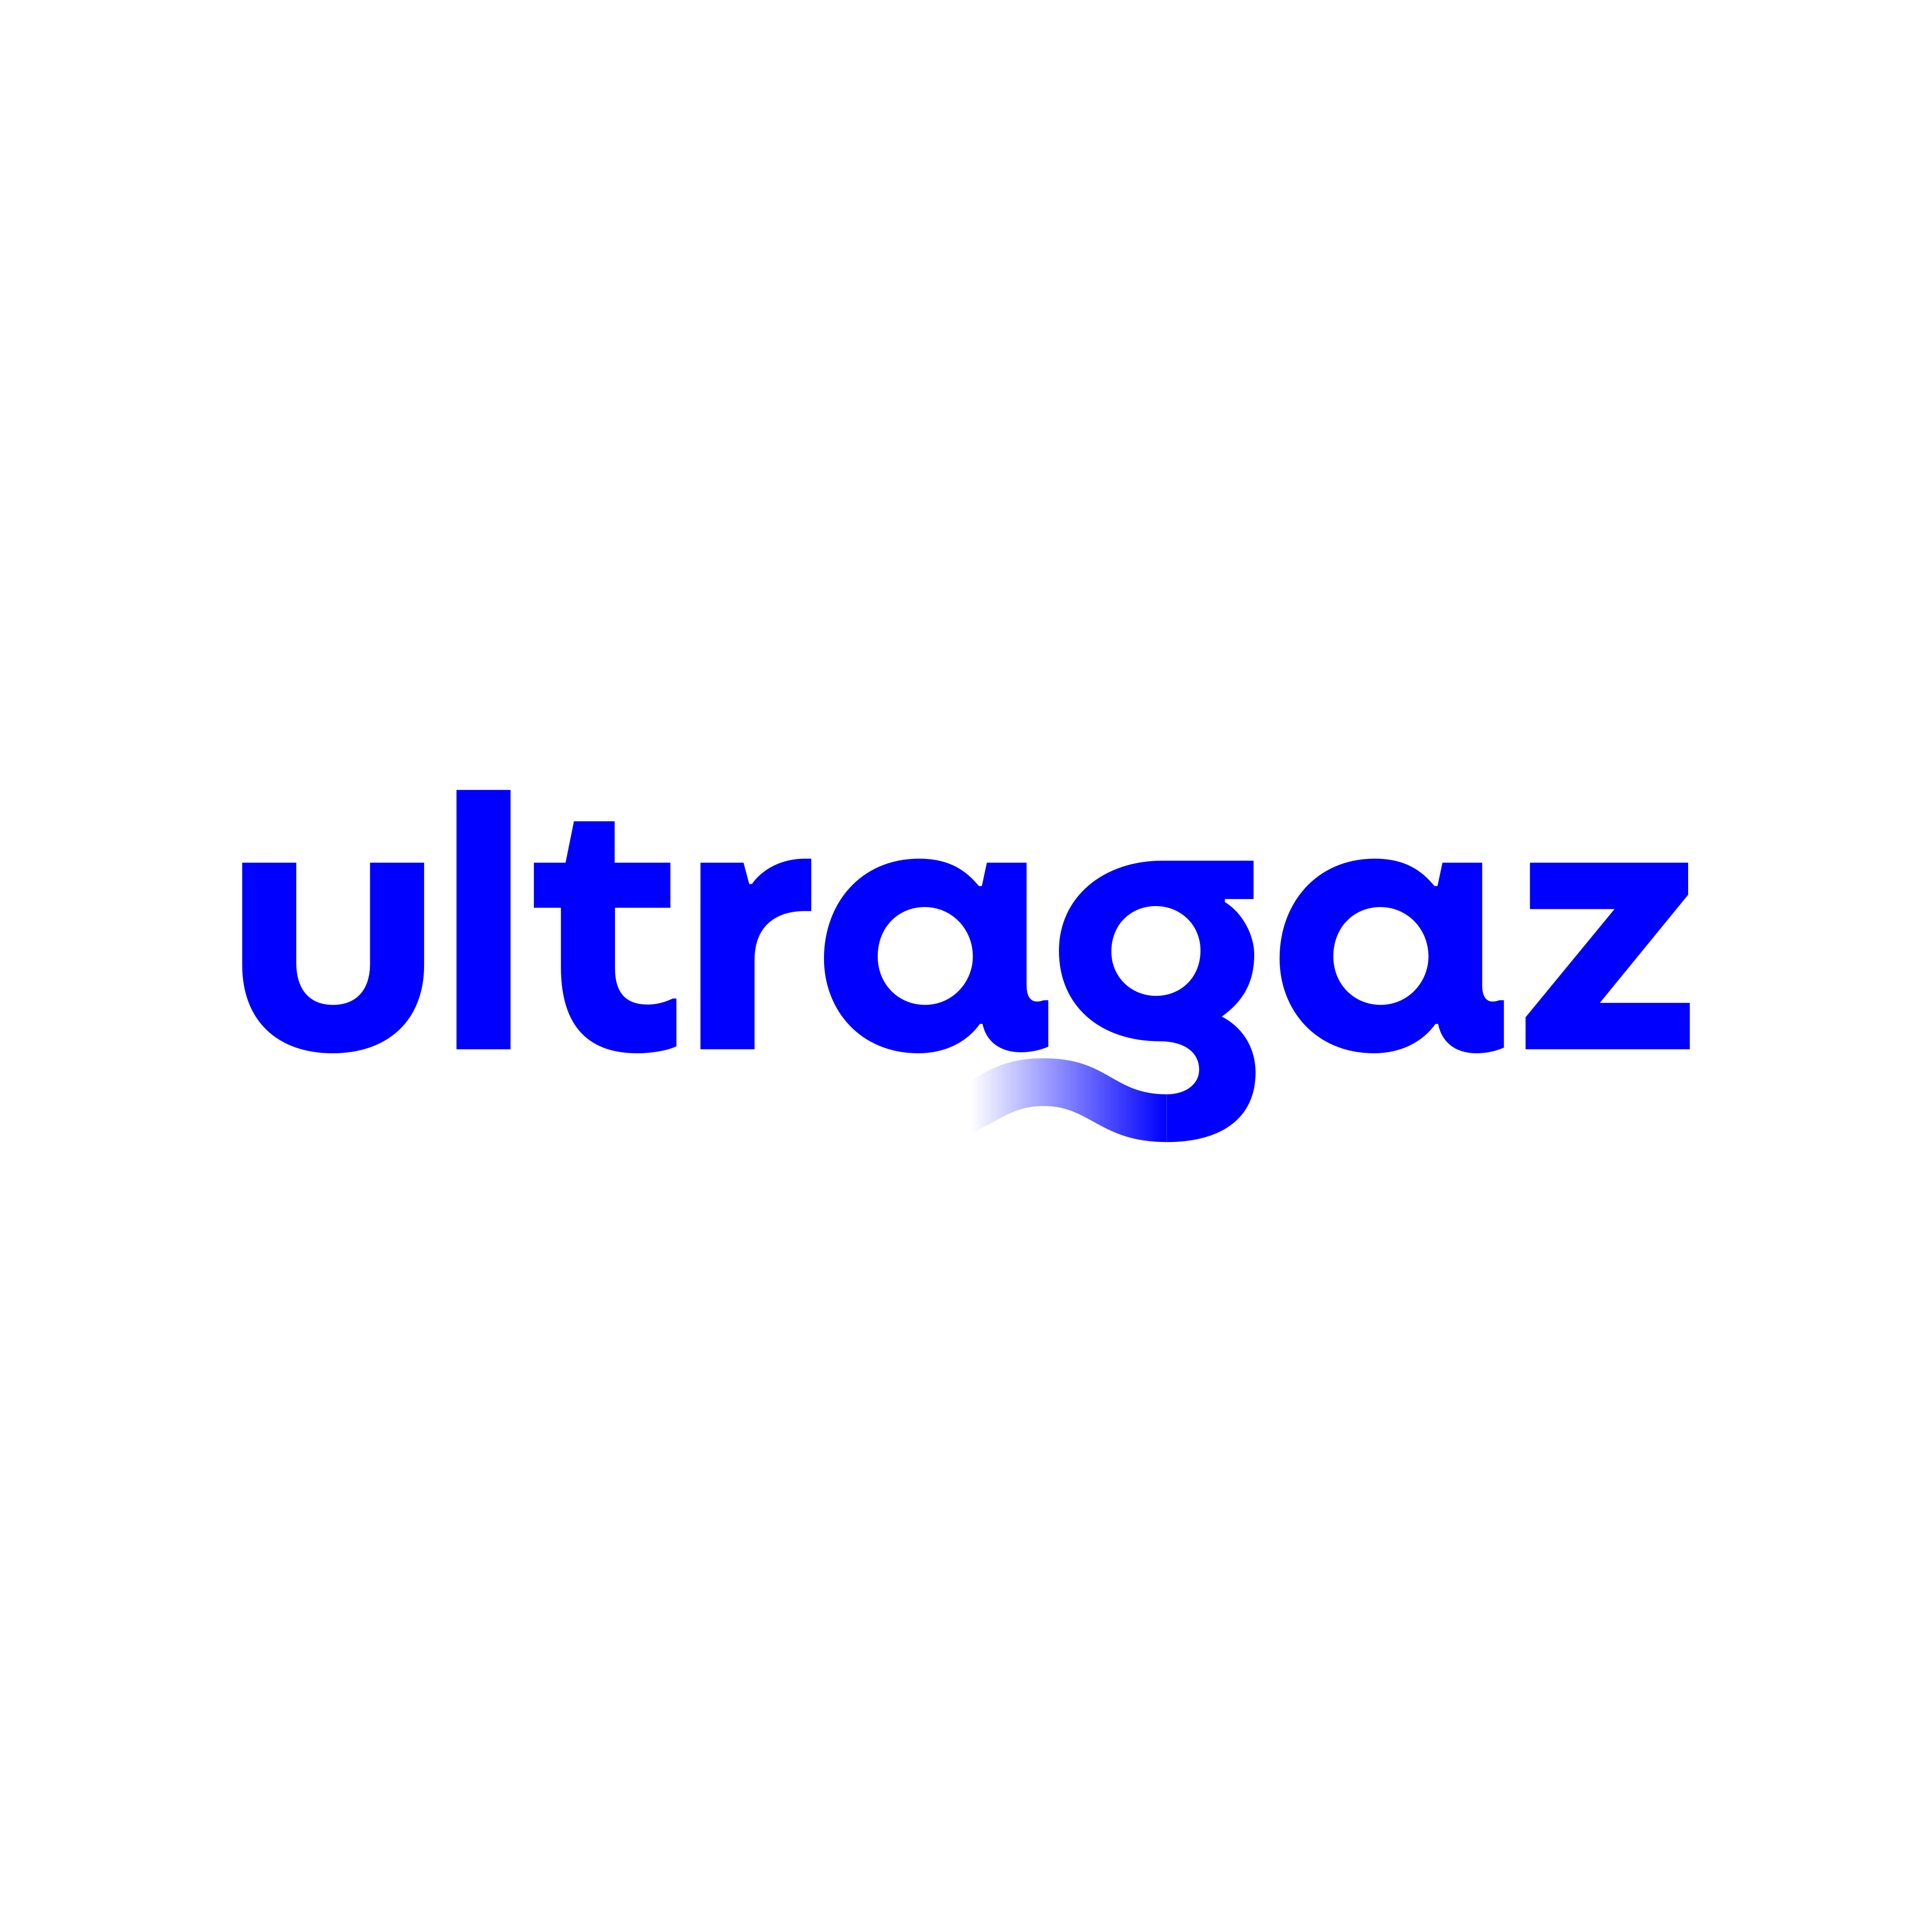 Ultragaz Logo PNG.